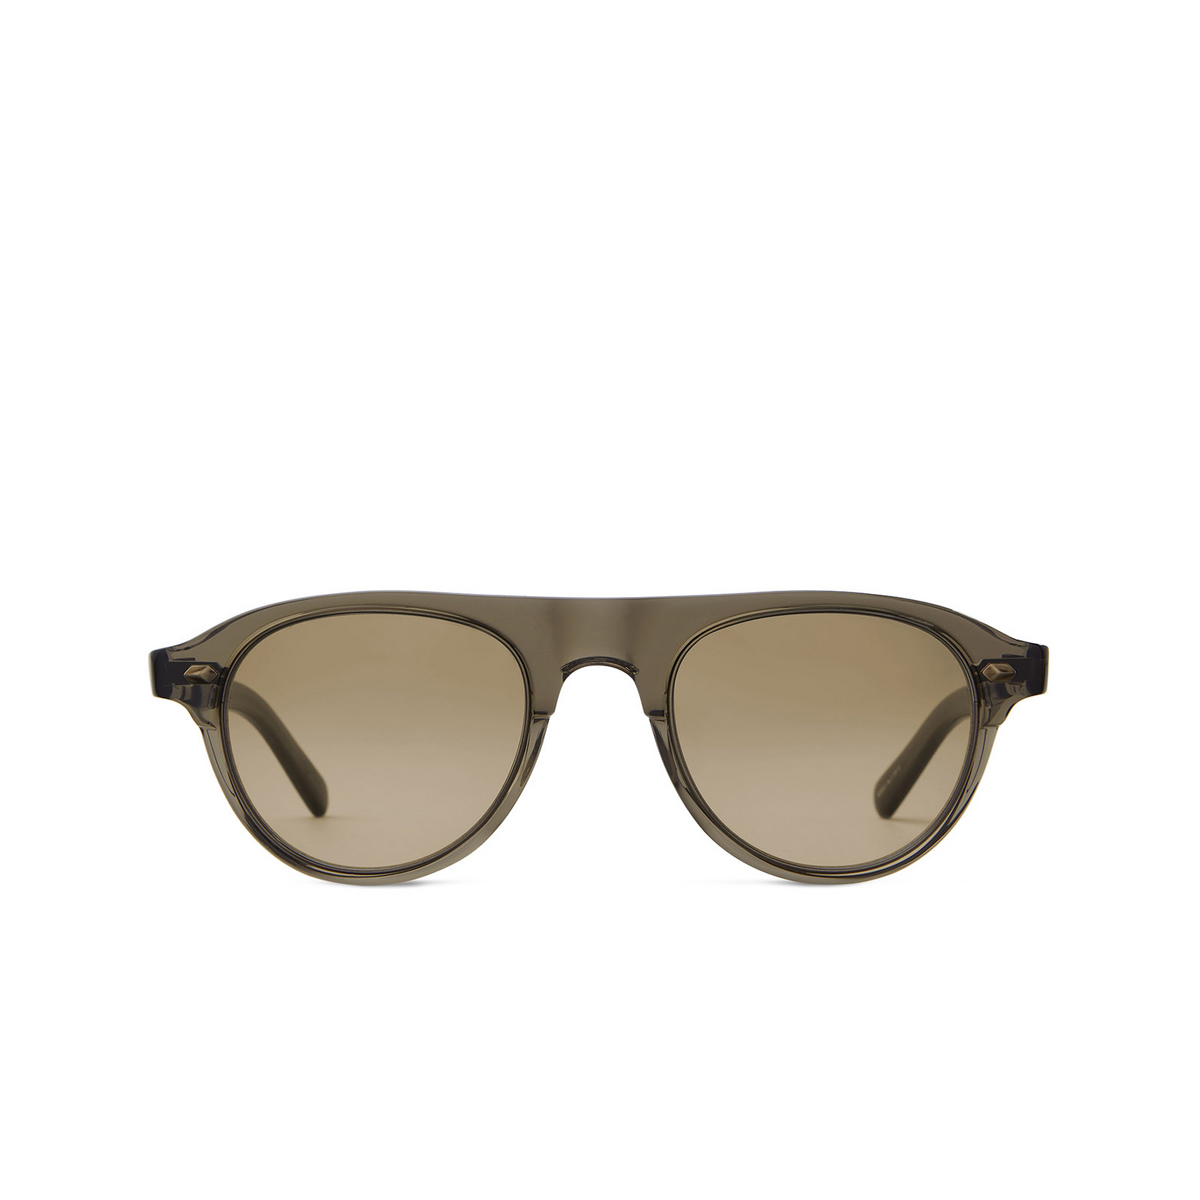 Mr. Leight STAHL S Sunglasses STO/SMKY Stone/Smokey - front view